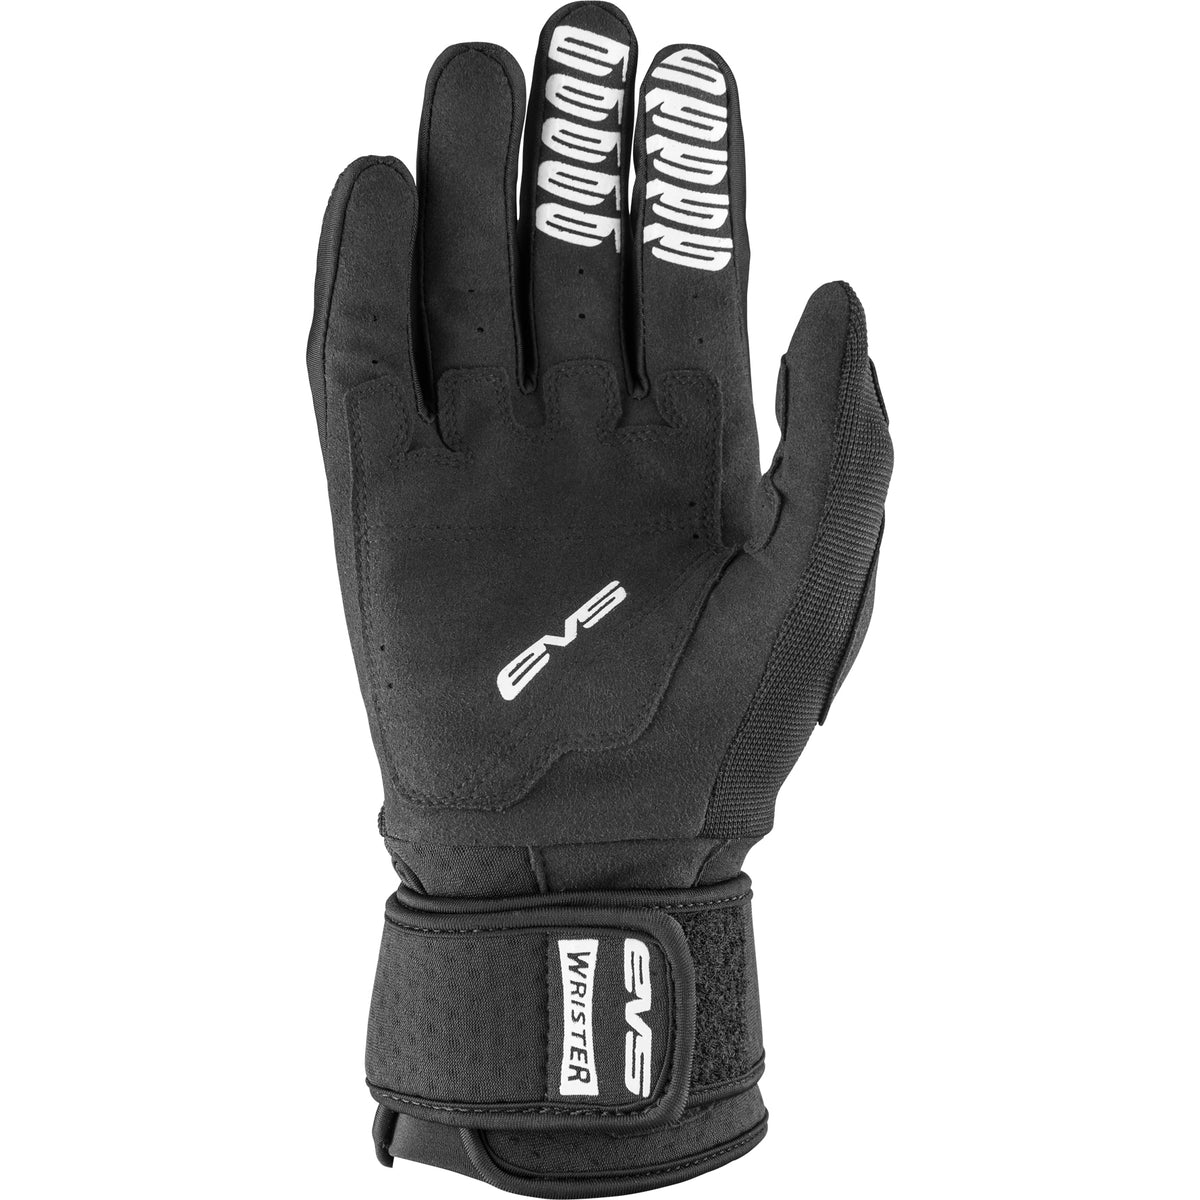 Wrister Glove - EVS Sports